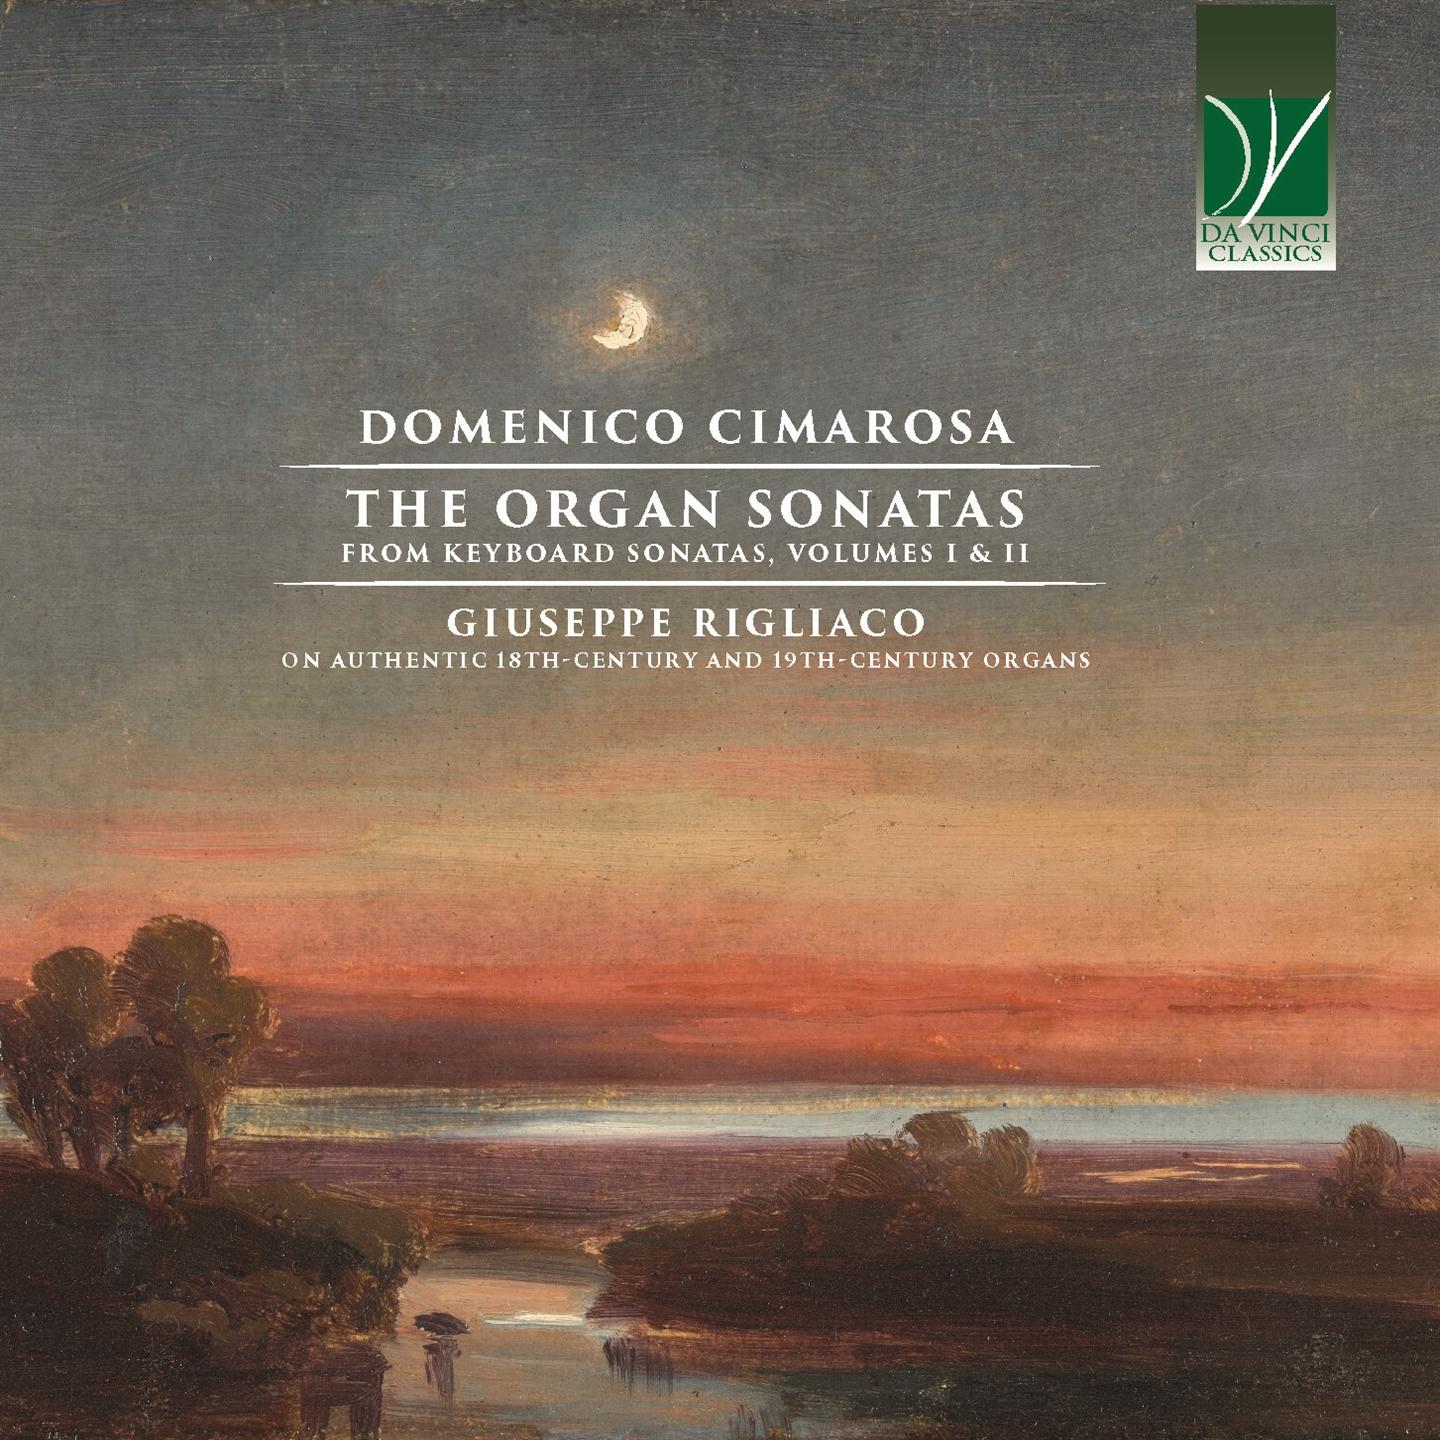 DOMENICO CIMAROSA: THE ORGAN SONATAS FROM KEYBOARD SONATAS, VOLUMES I & II